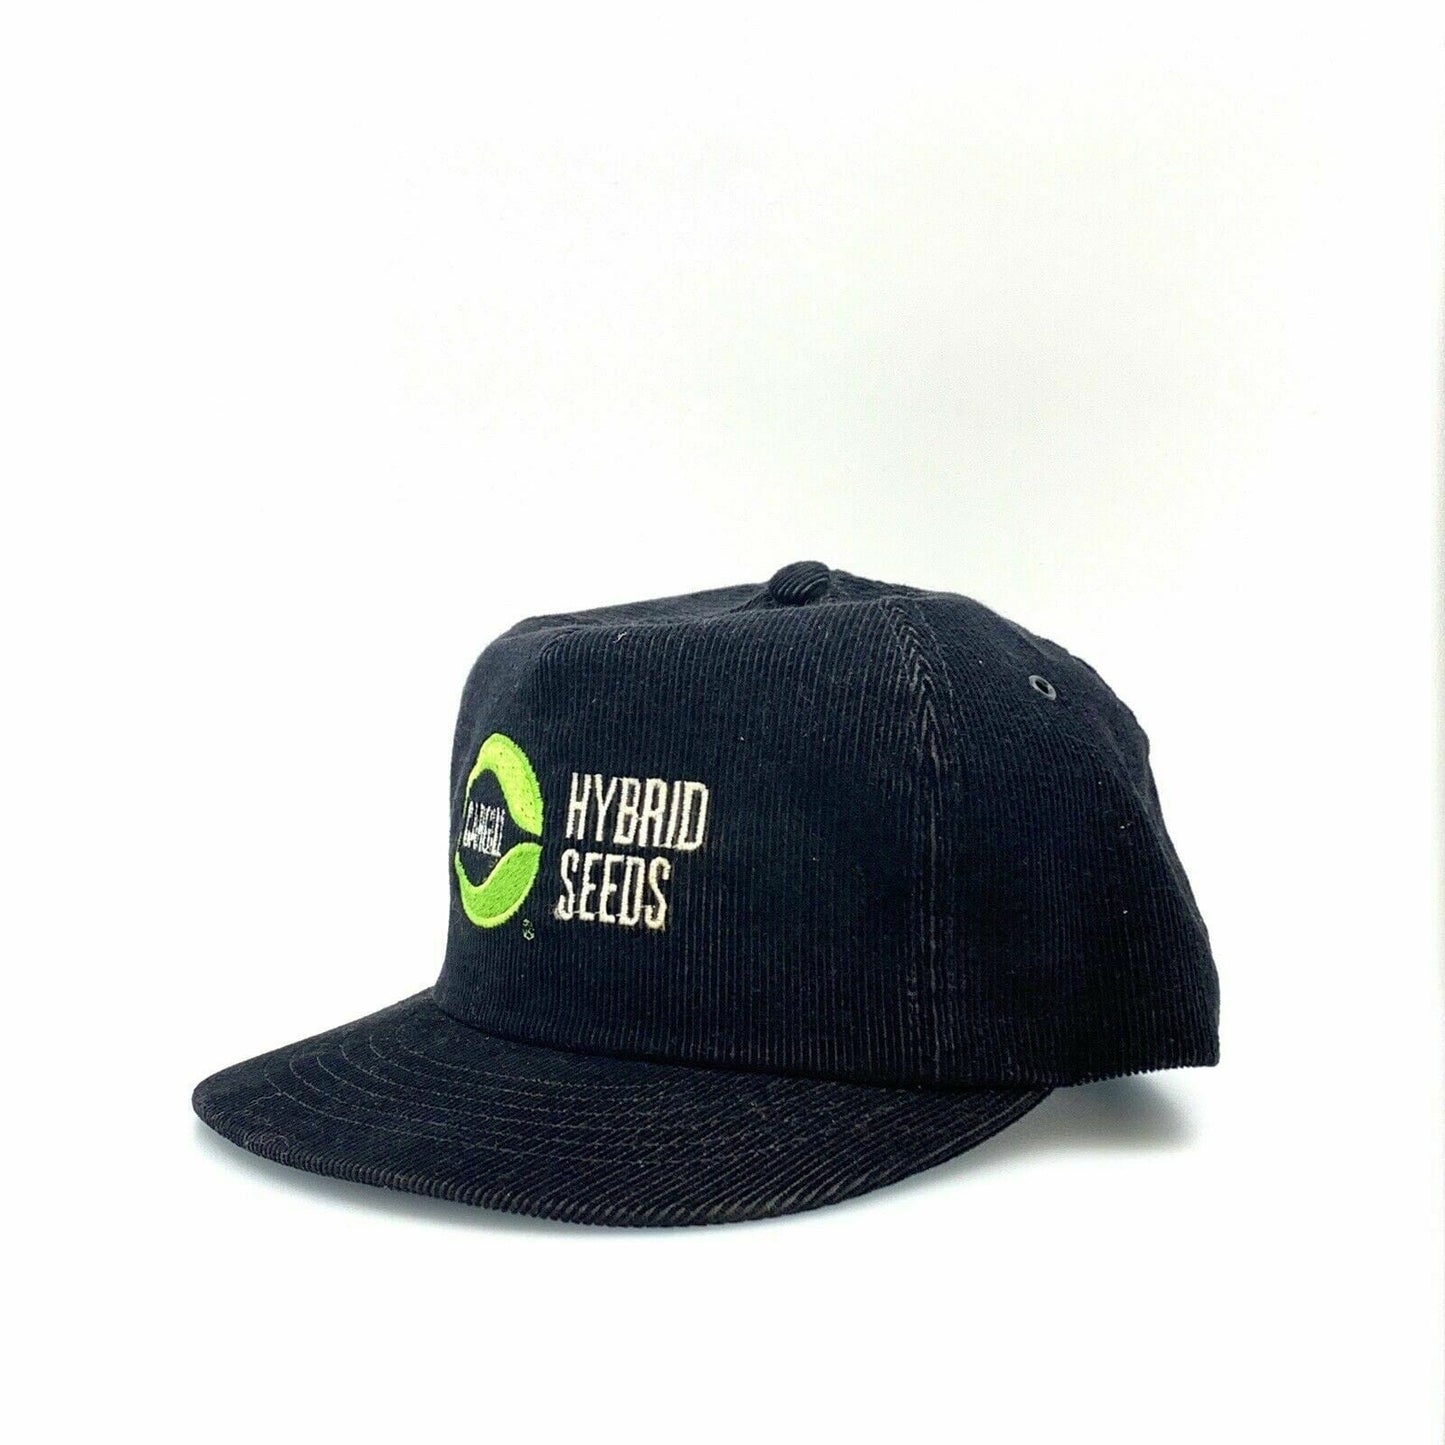 Vintage Swingster Cargill Hybrid Seeds Corduroy Snapback Hat, Black - OSFA